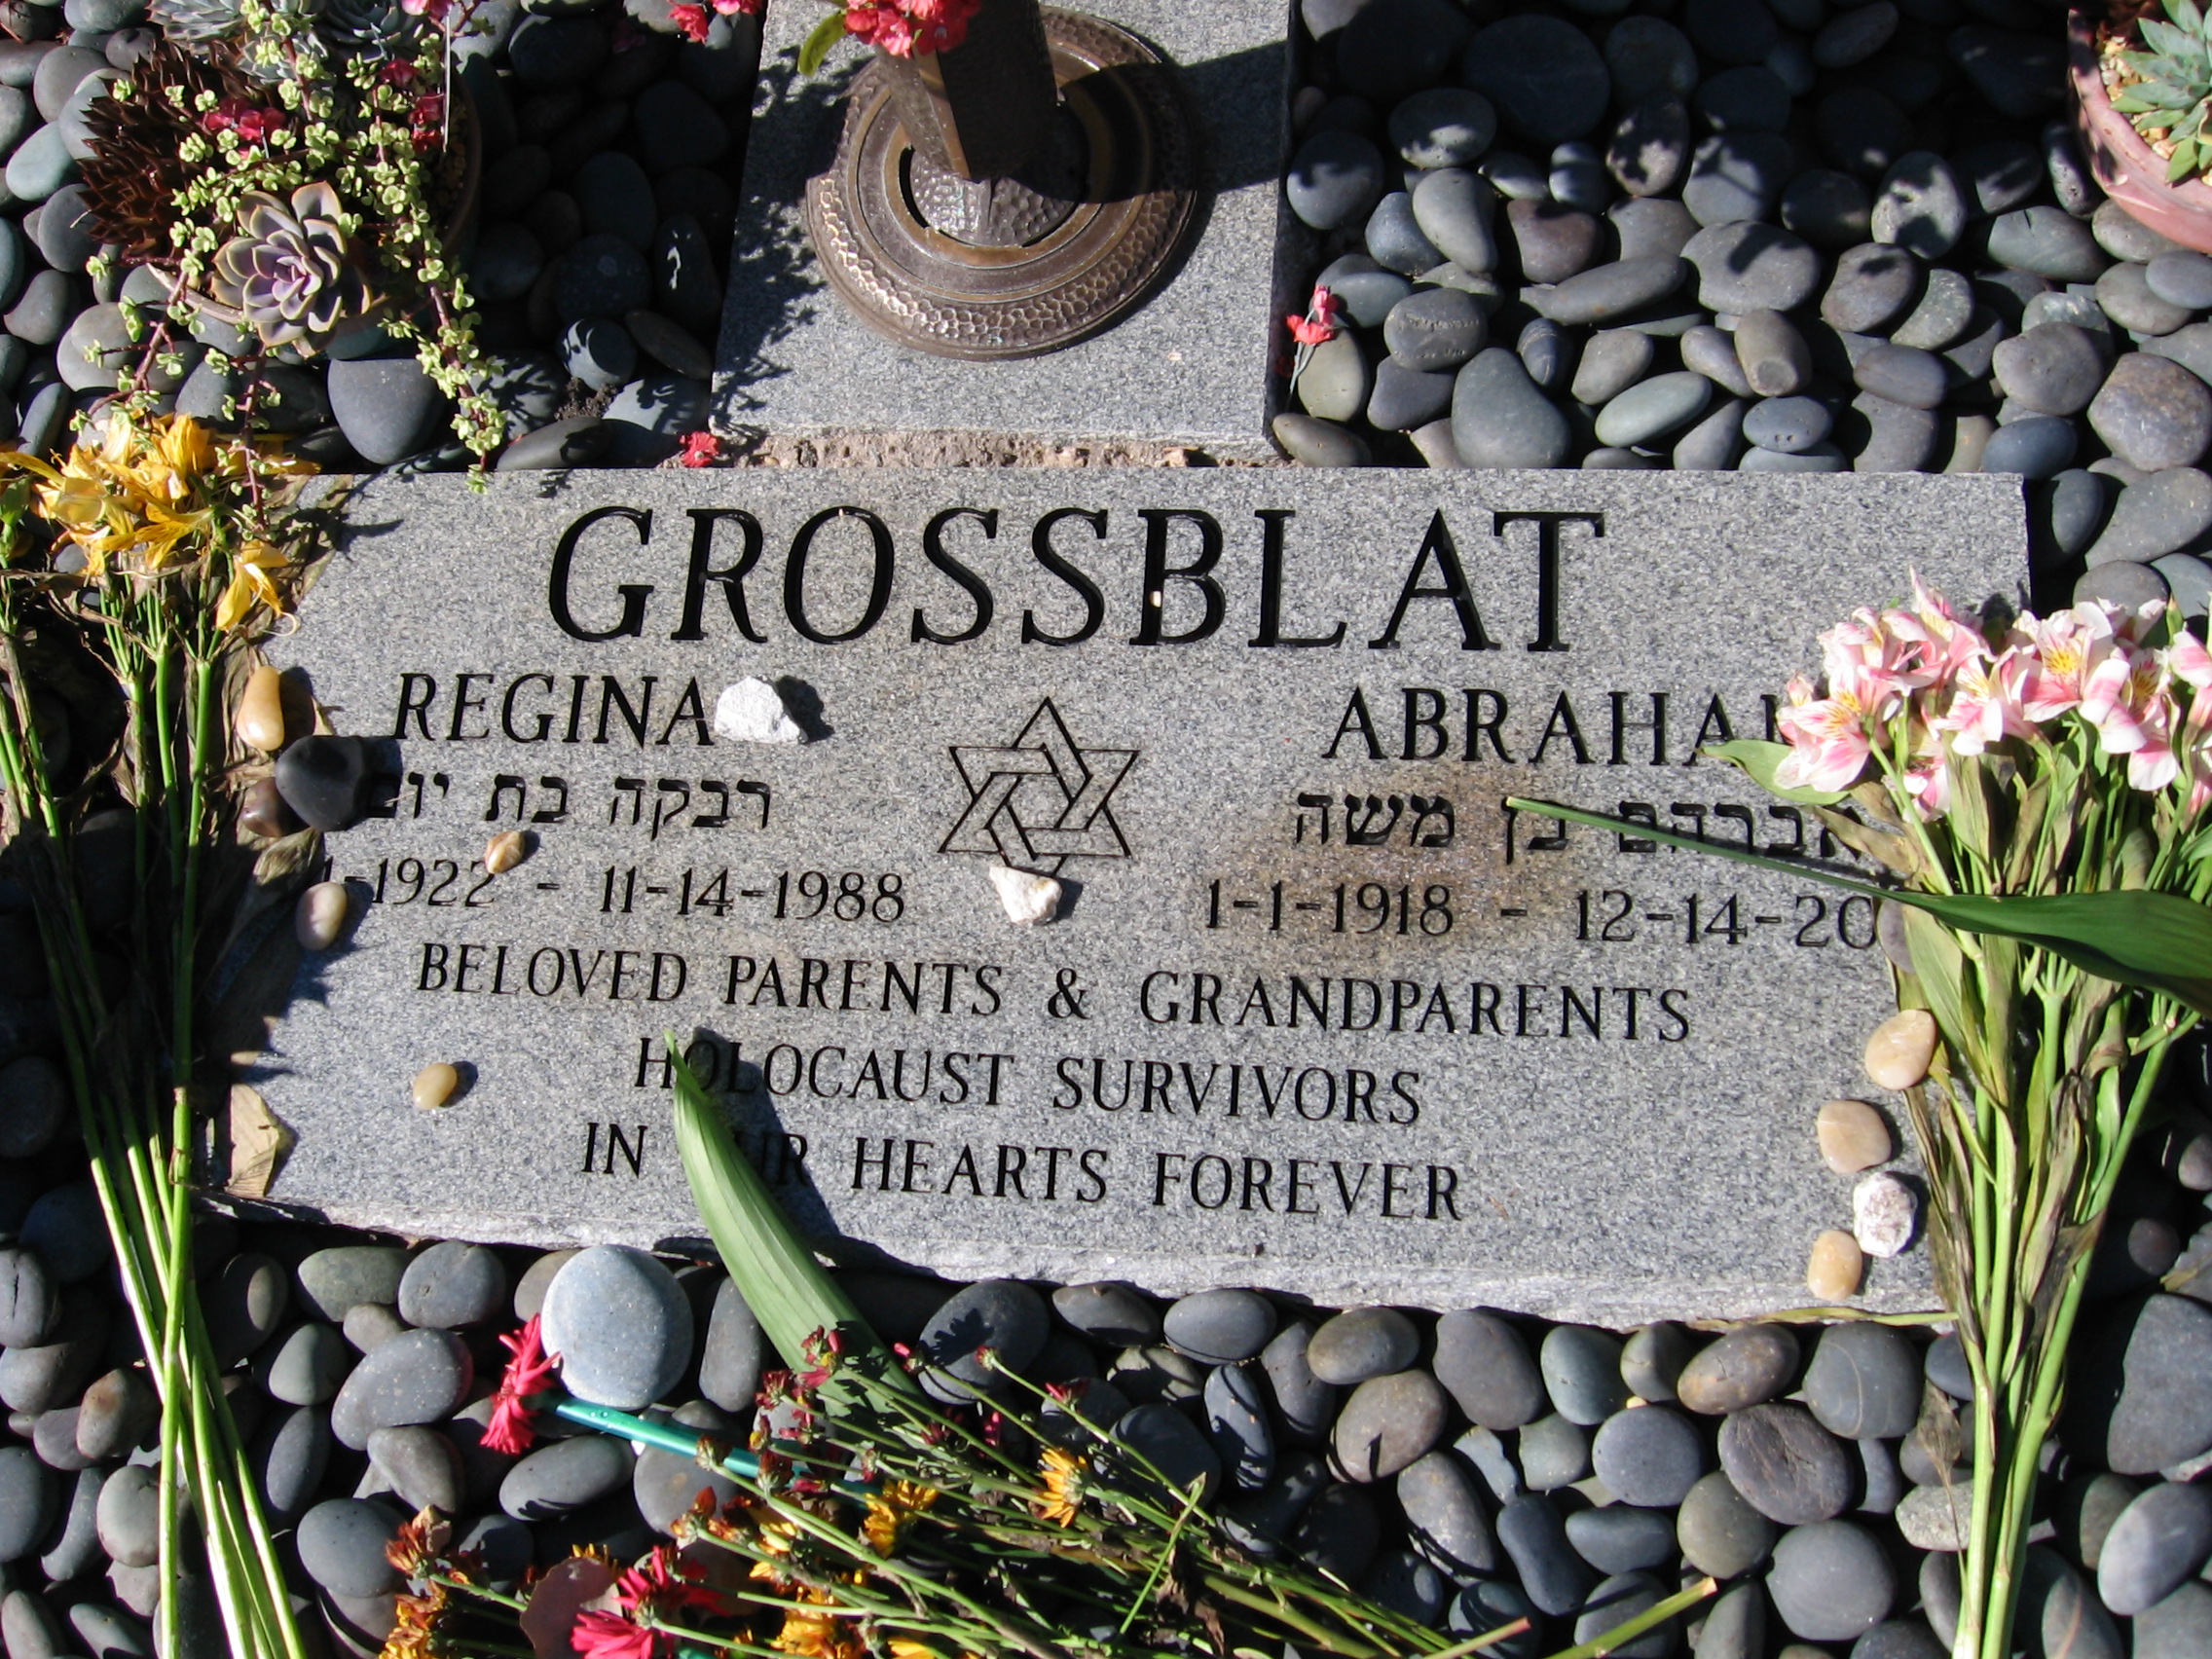 Abraham Grossblat